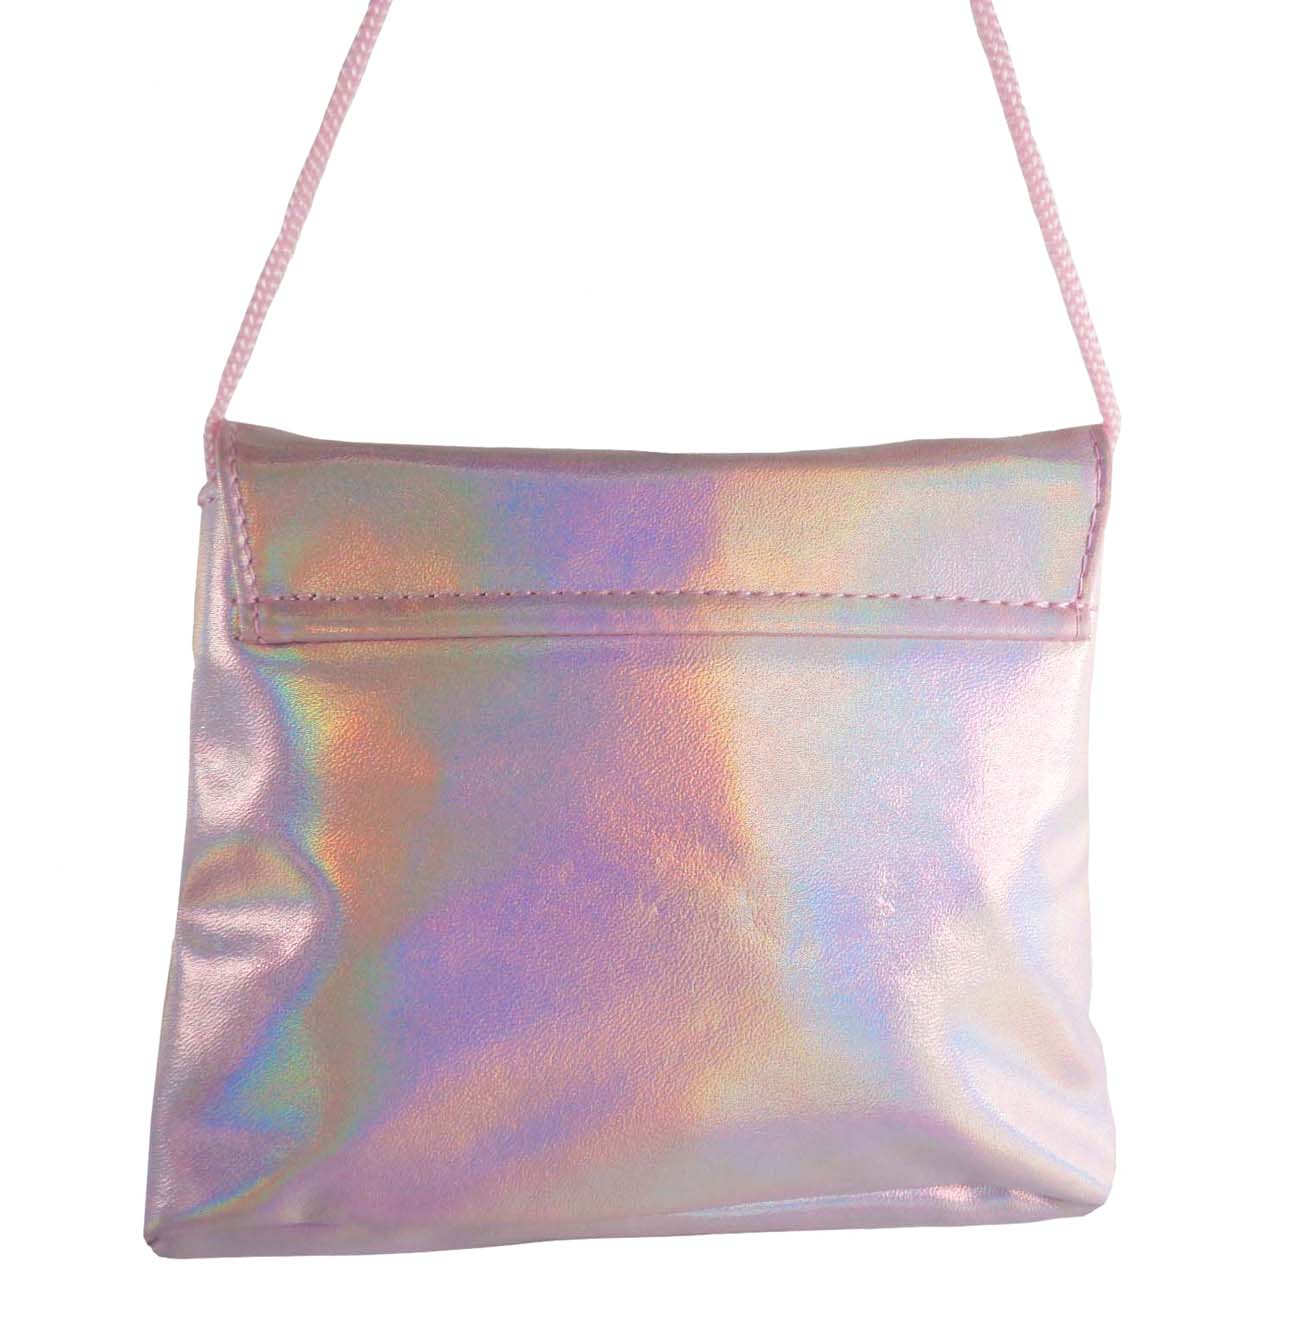 Childrens pink sparkly handbag-6528